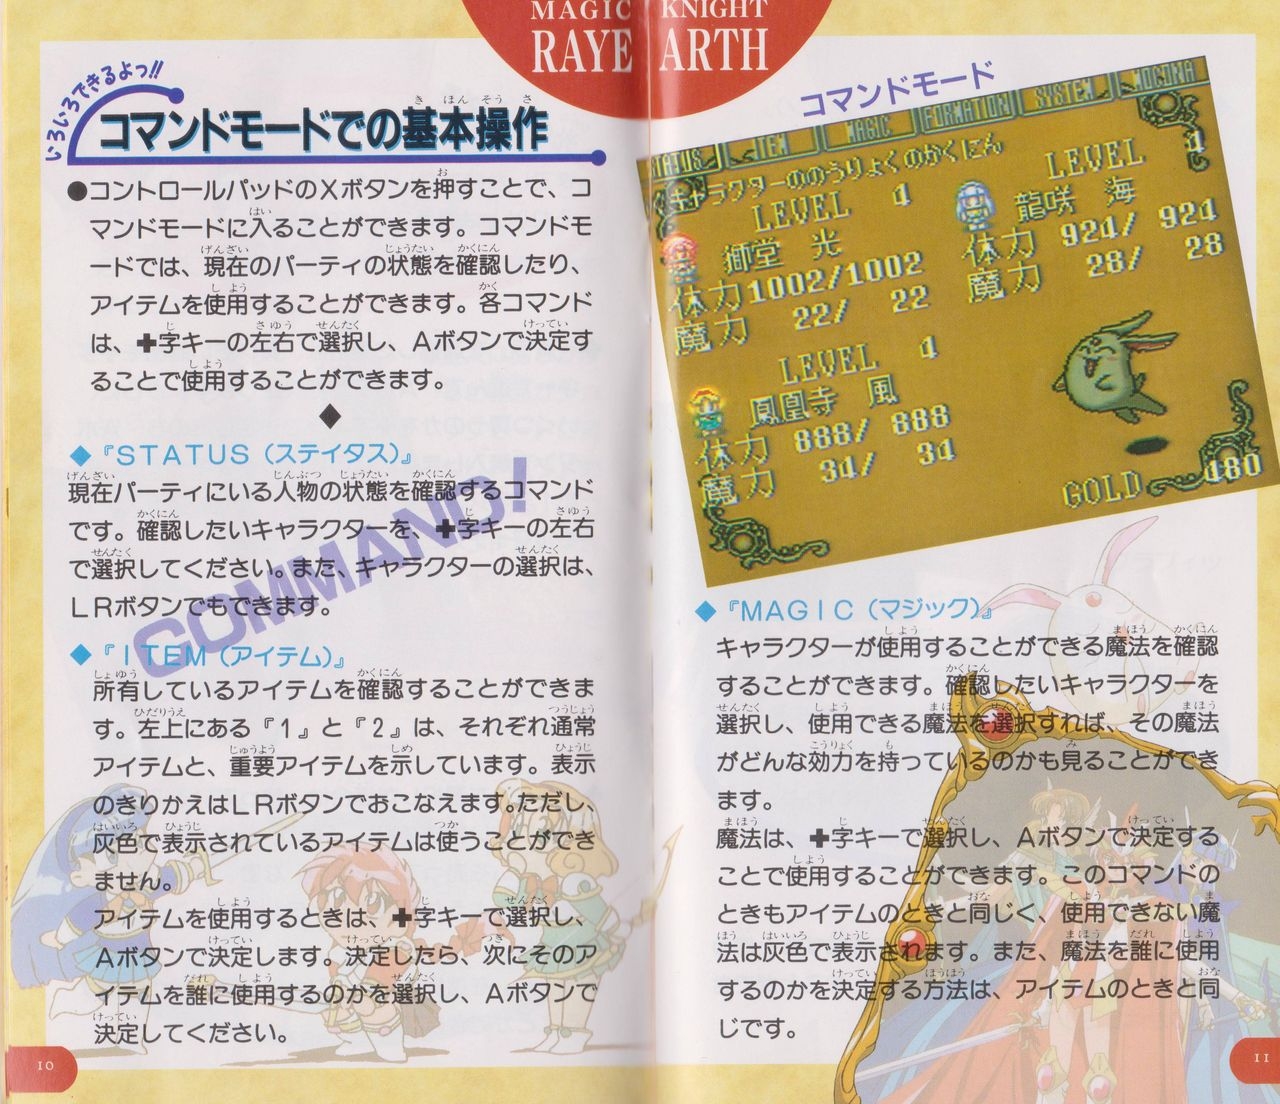 Magic Knight Rayearth - Box & Manual Scans [Super Famicom] 8